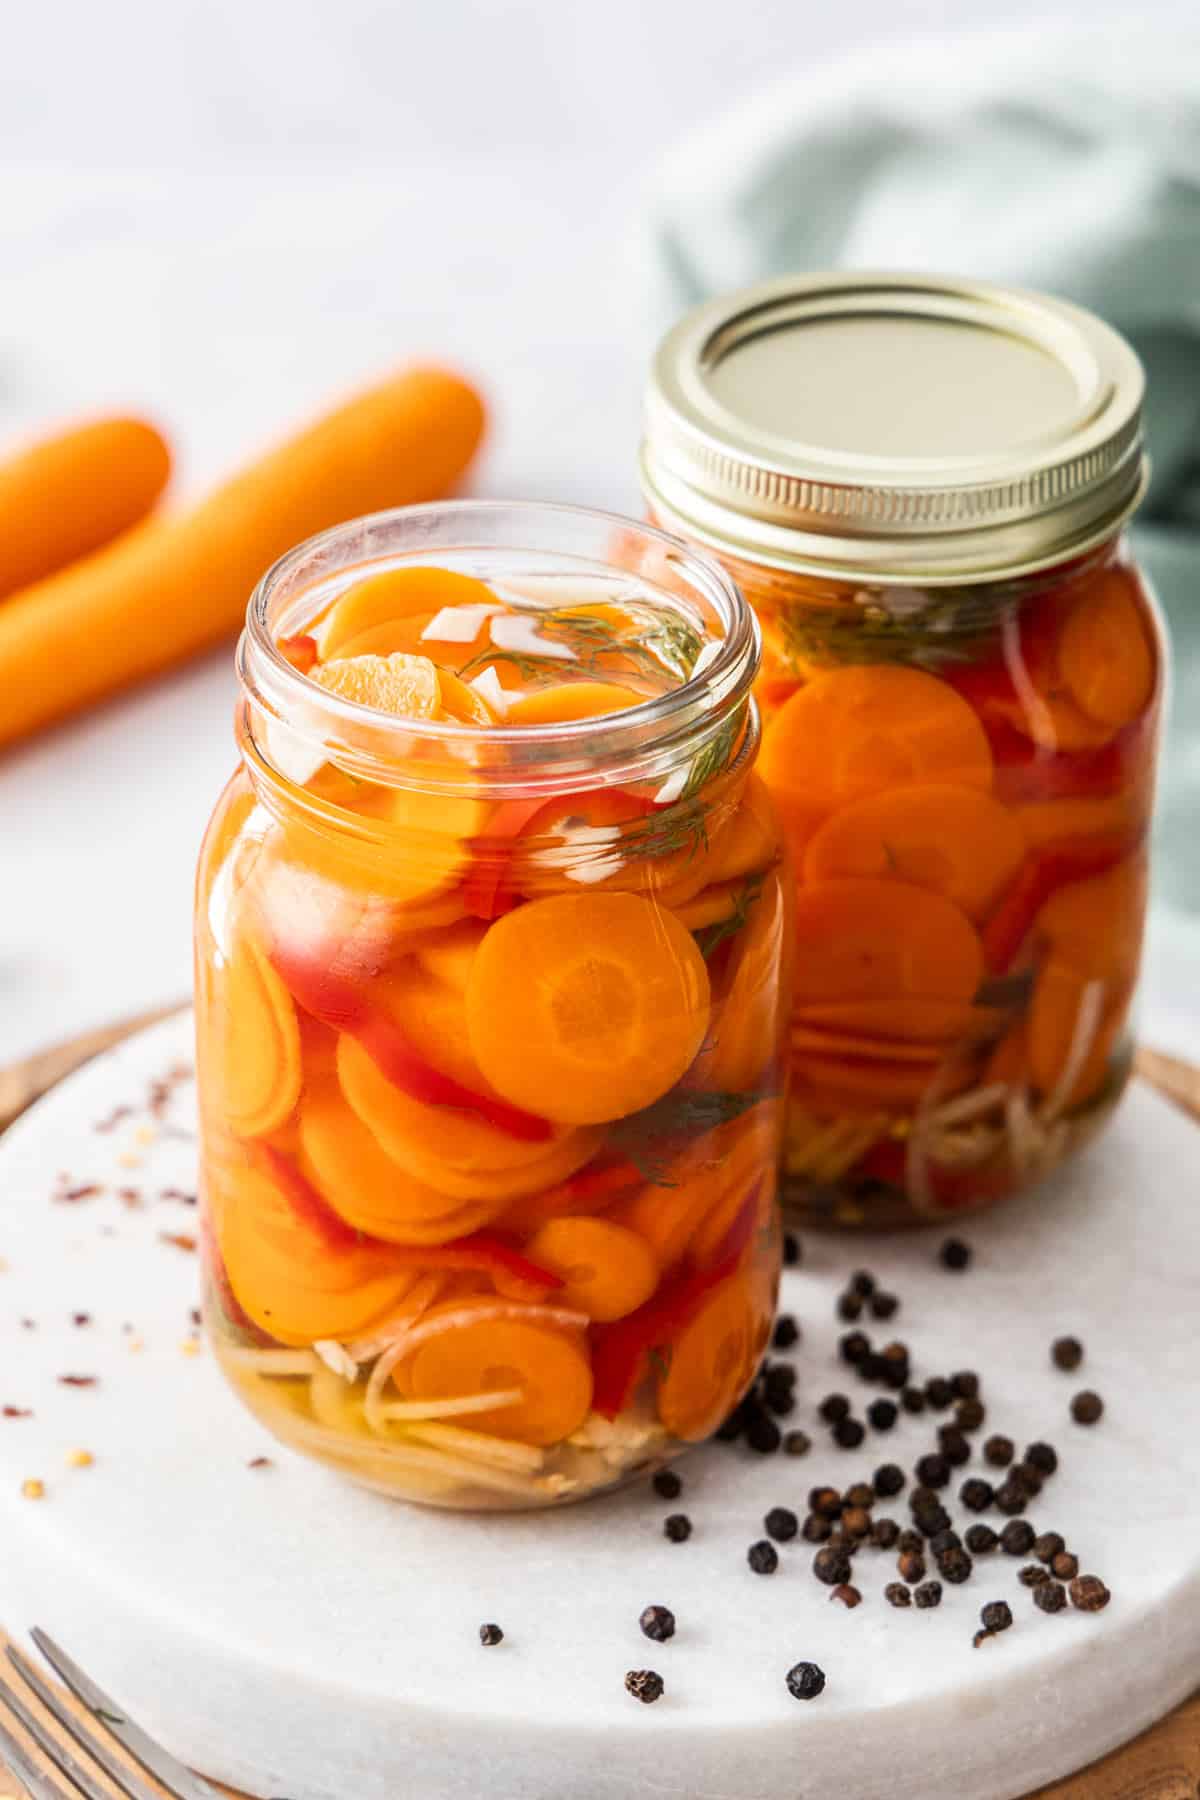 Two jars of sliced carrots in brine.